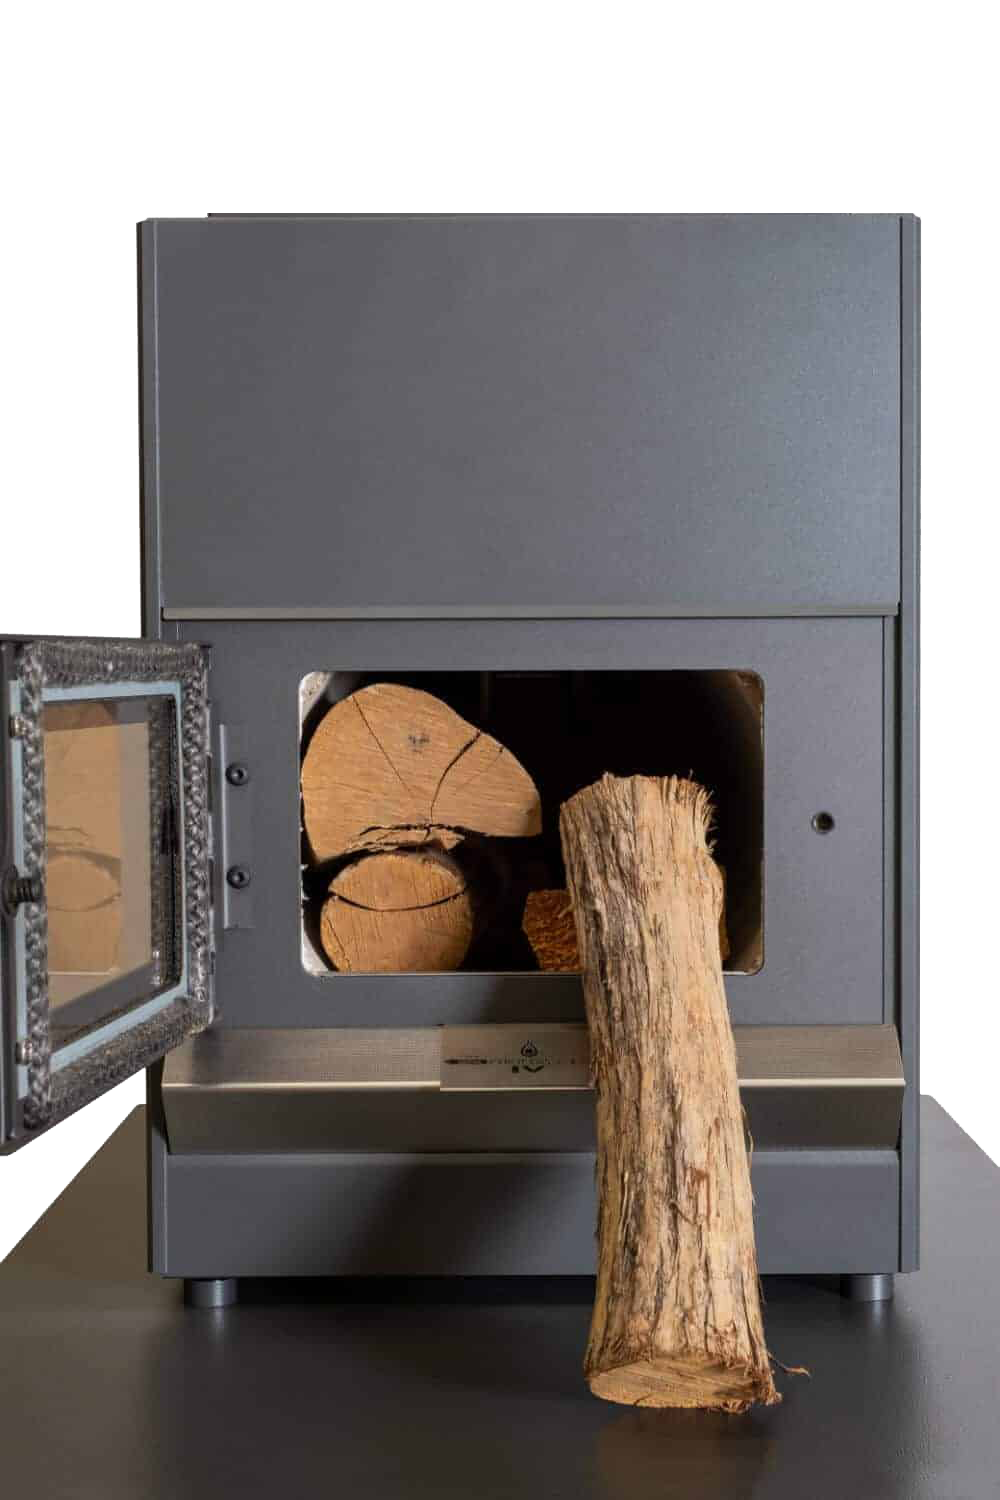 Pyroclassic Moisture Meter measuring wood moisture